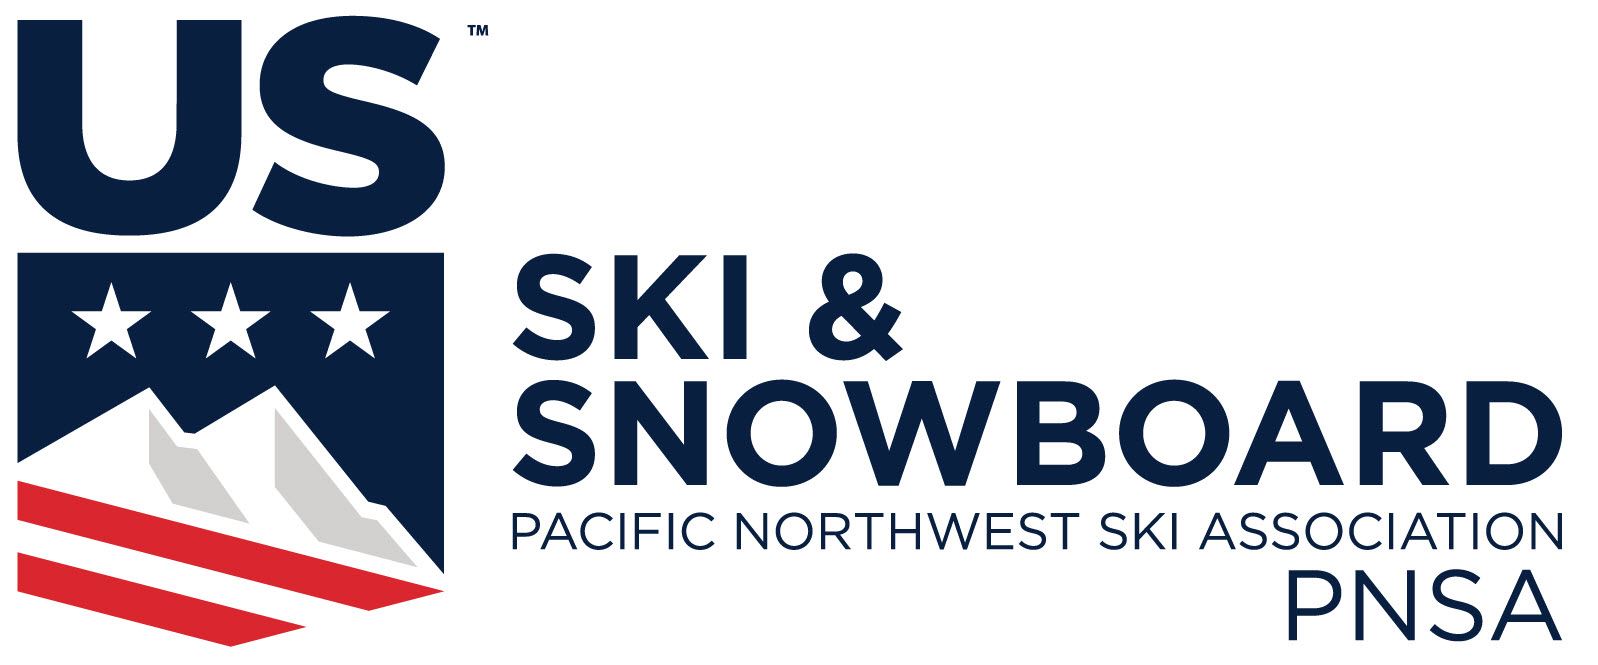 Pacific Northwest Ski Association (PNSA)